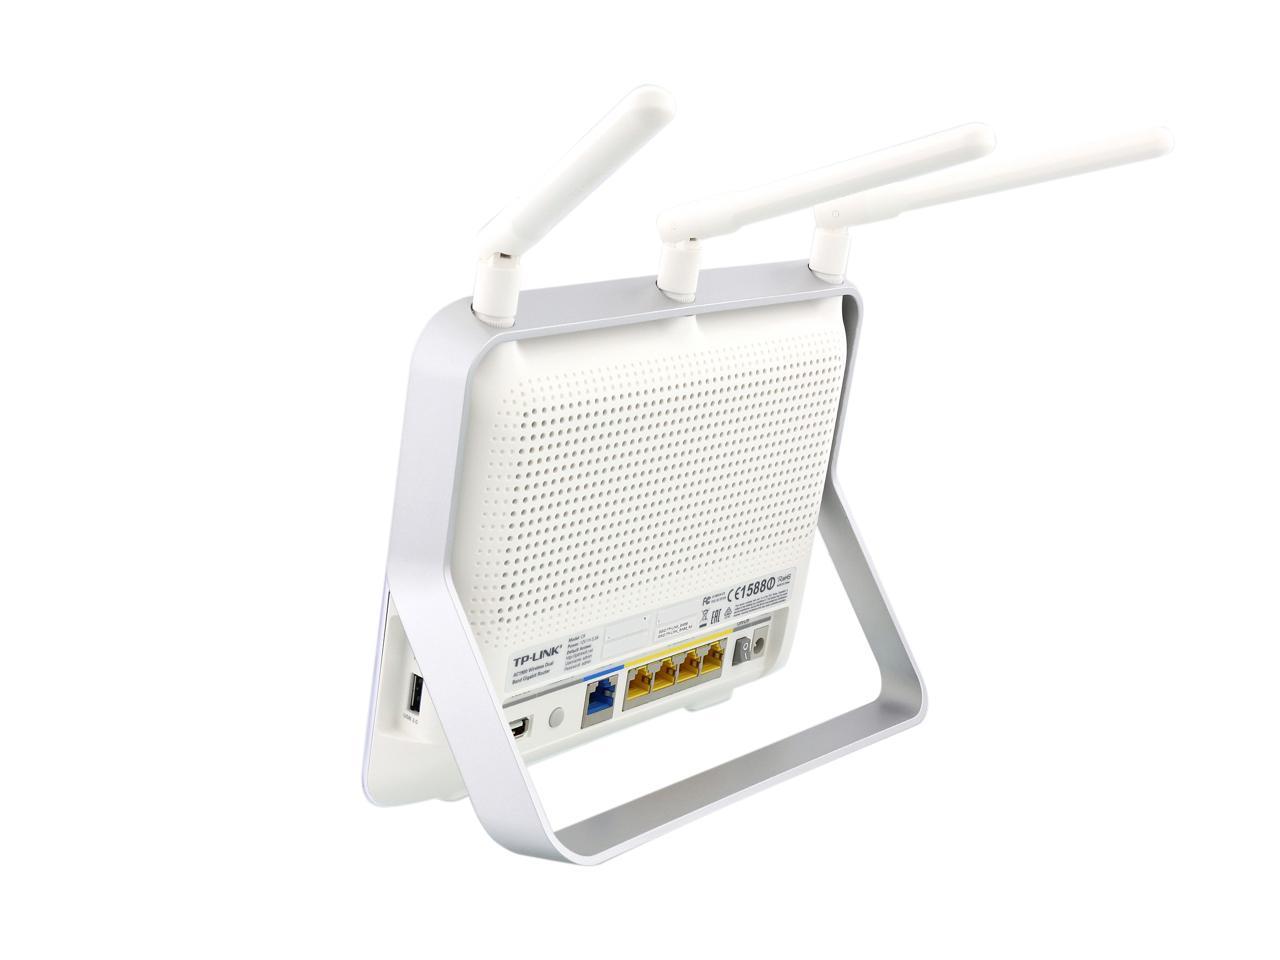 TP-LINK Archer C9 Wireless AC1900 Dual Band Gigabit Router 